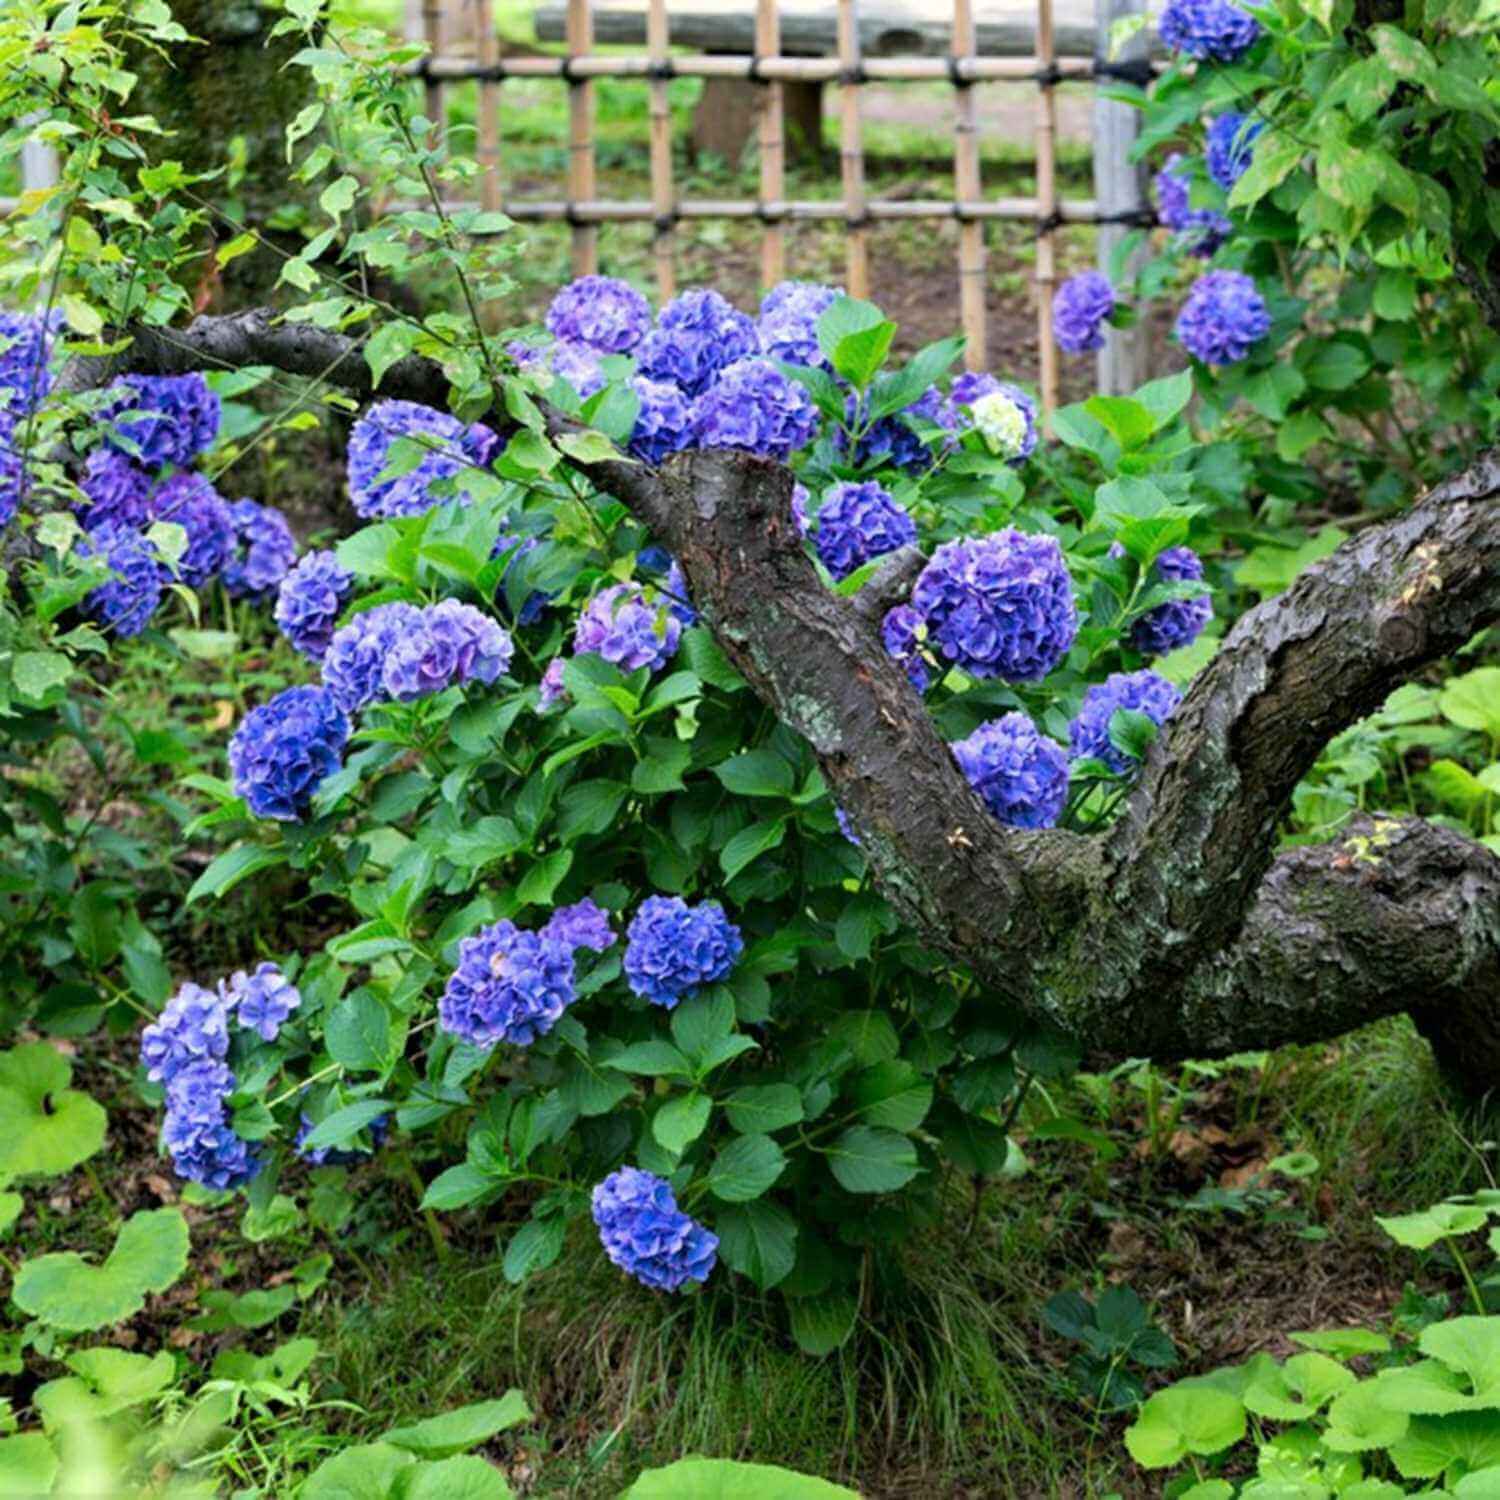 Hydrangeas beautifully blooming during the rainy season = Shutterstock 10